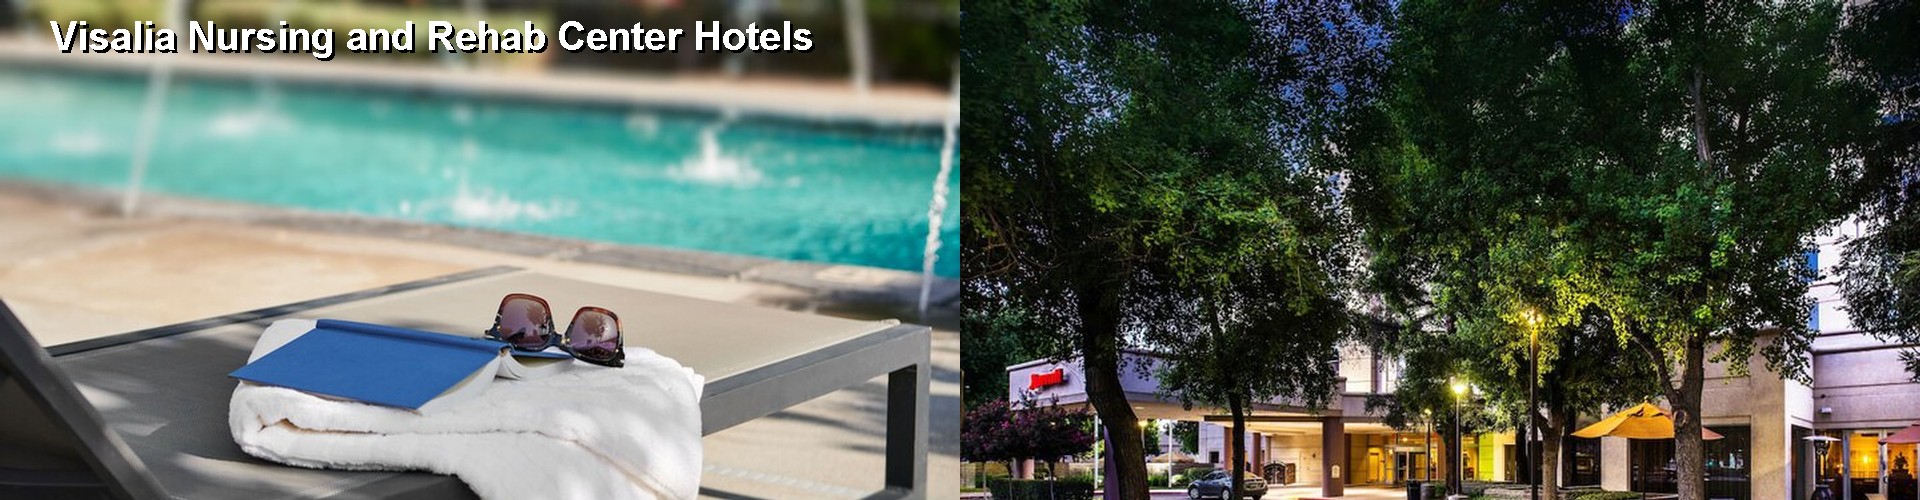 5 Best Hotels near Visalia Nursing and Rehab Center